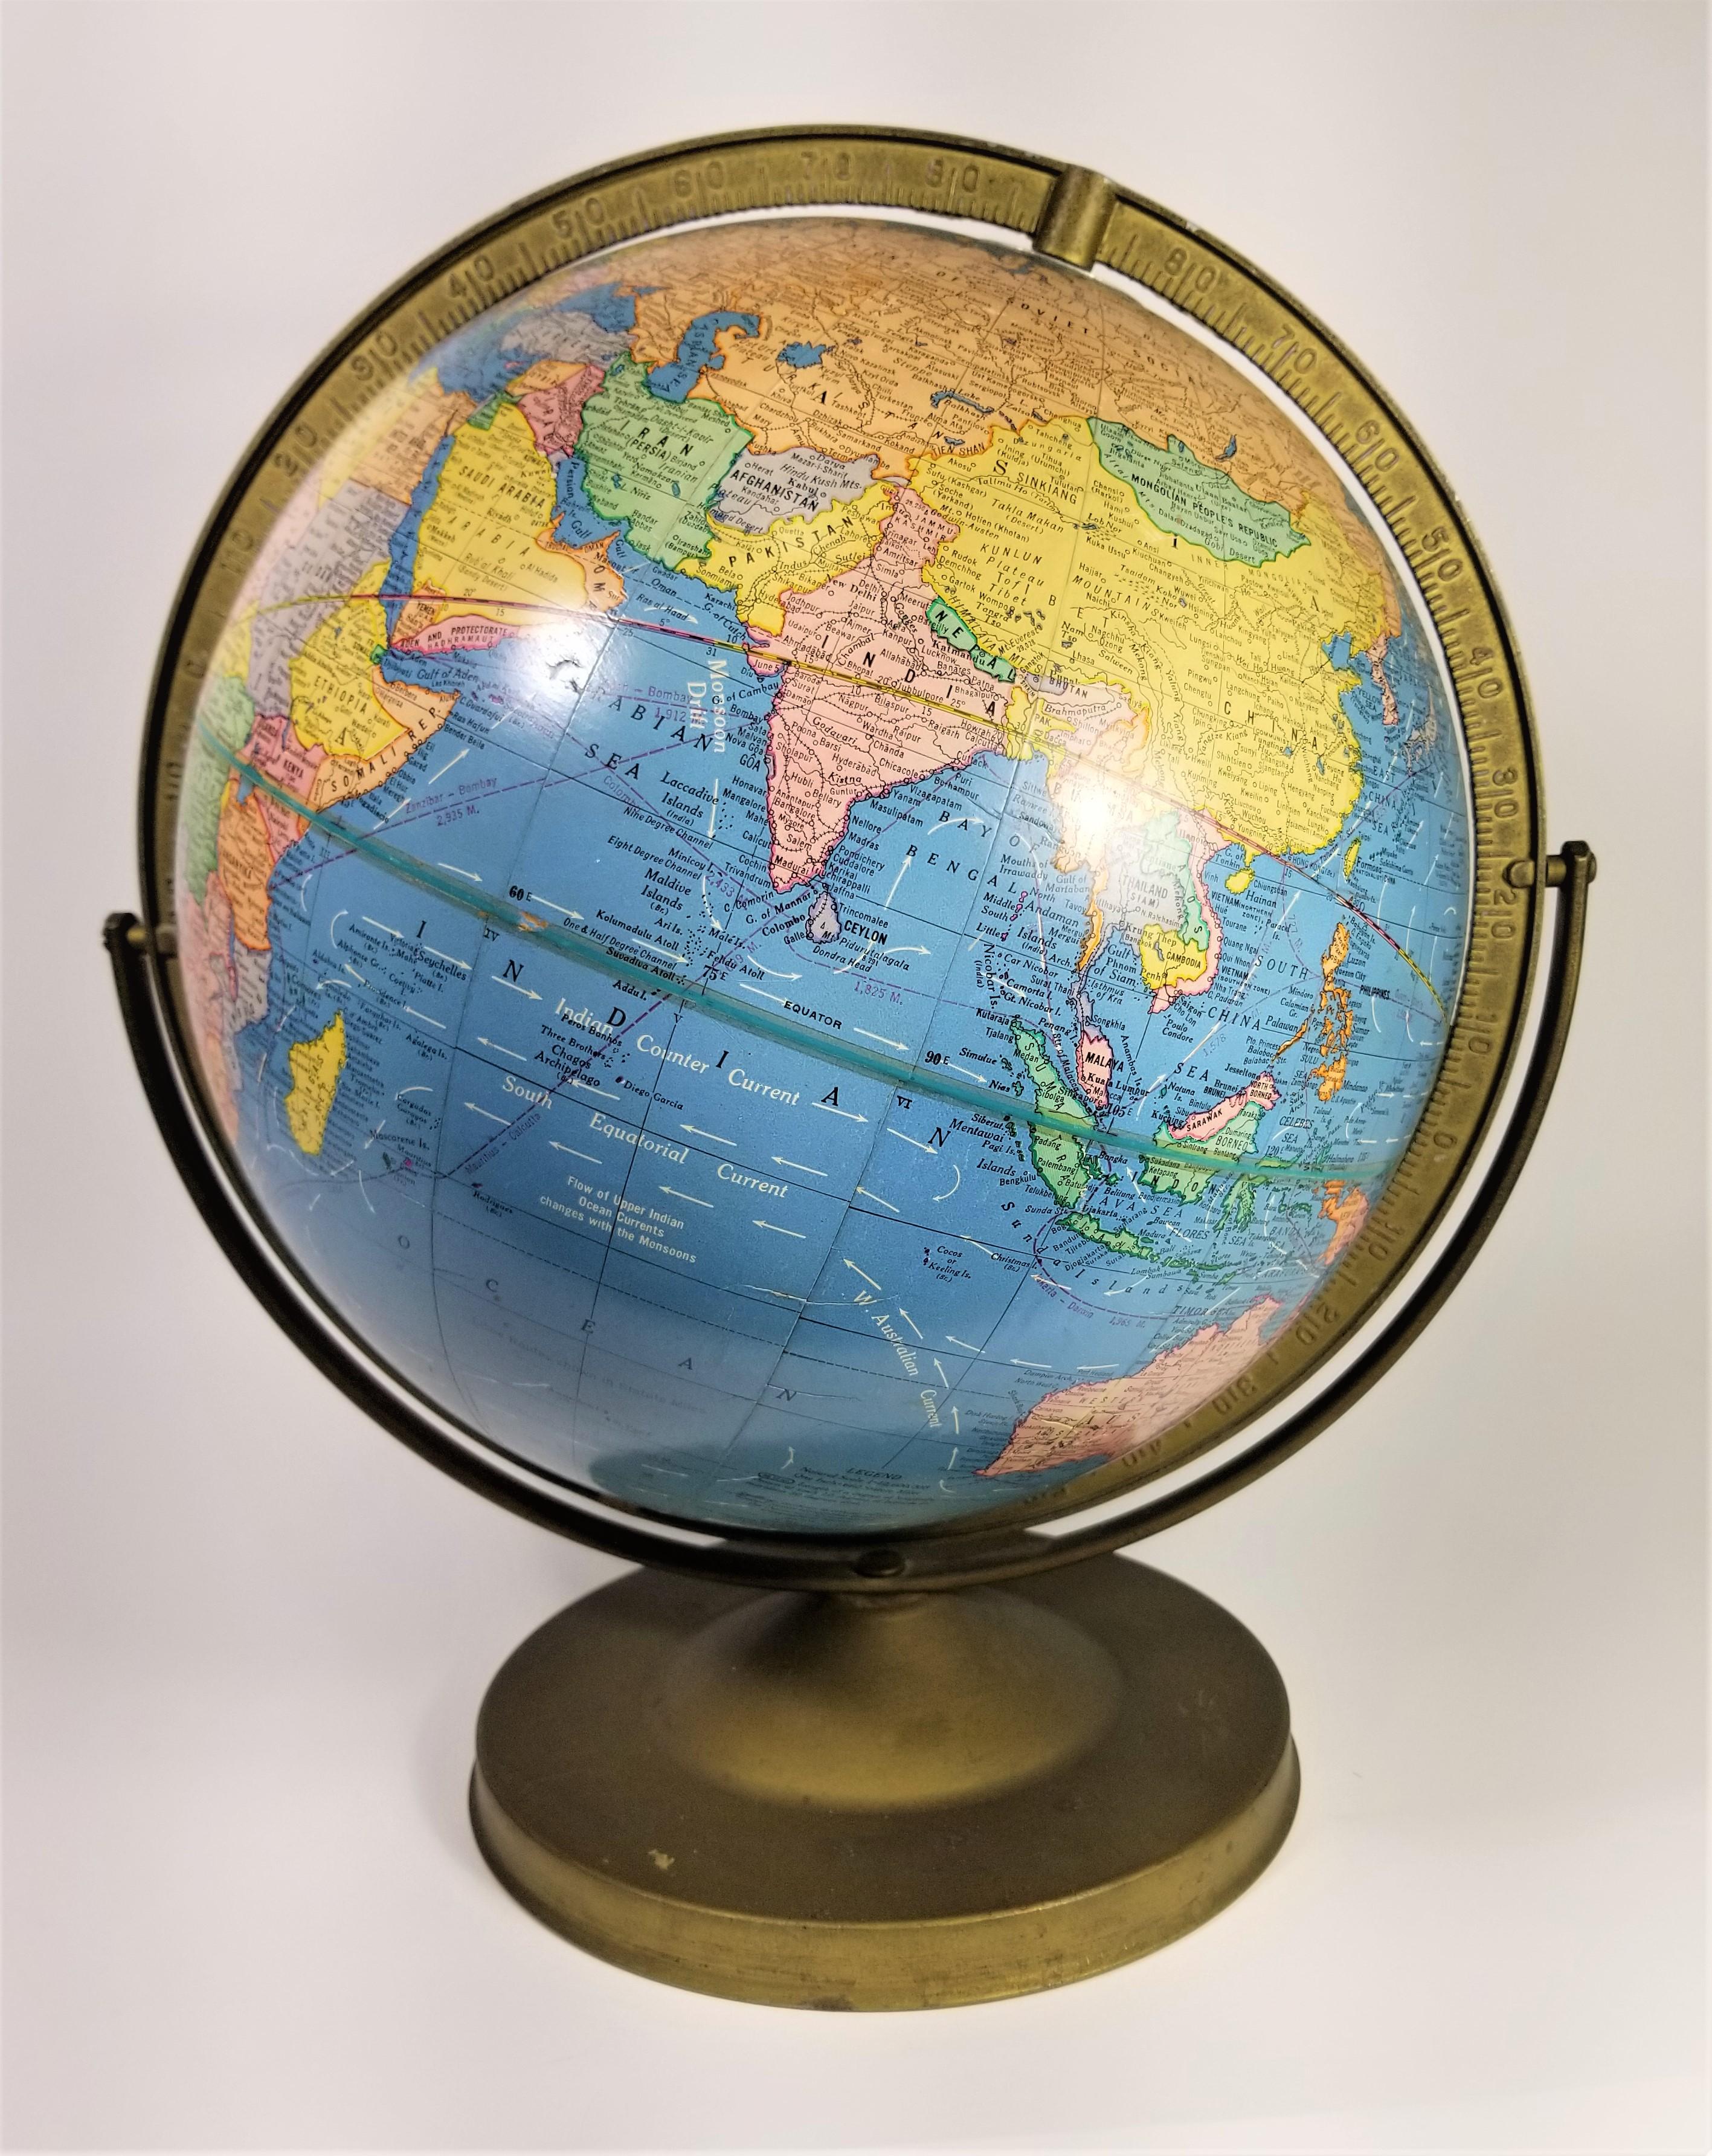 cram's imperial globe